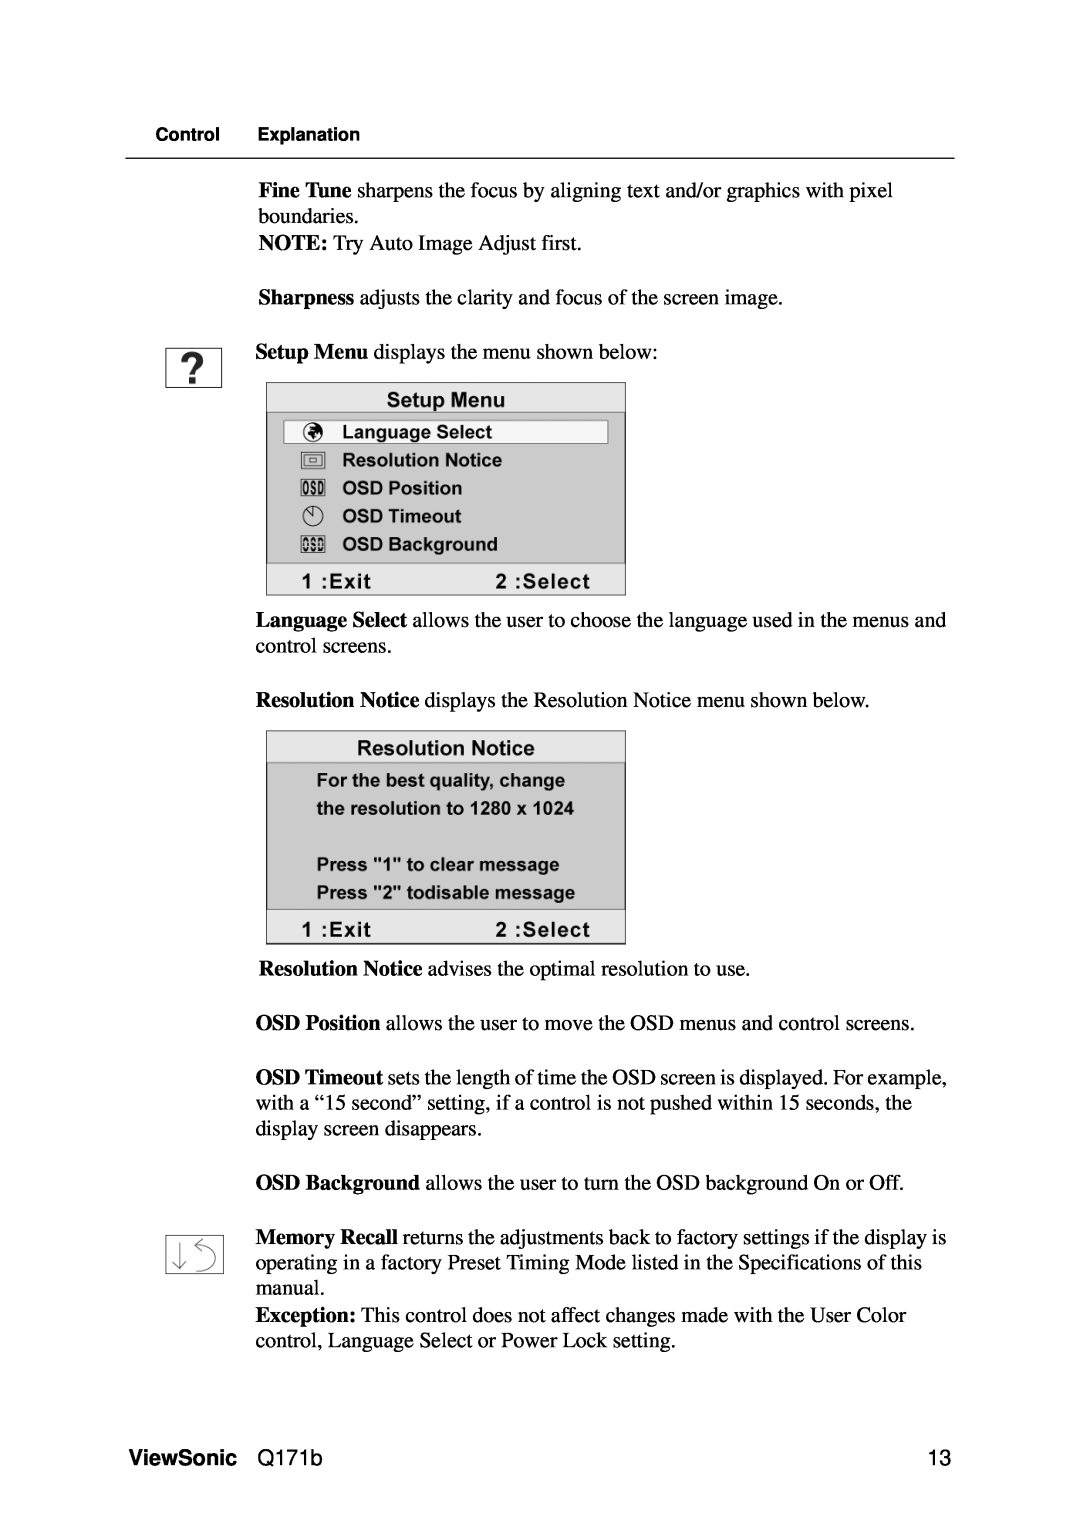 ViewSonic VS11351 manual NOTE: Try Auto Image Adjust first, ViewSonic Q171b 